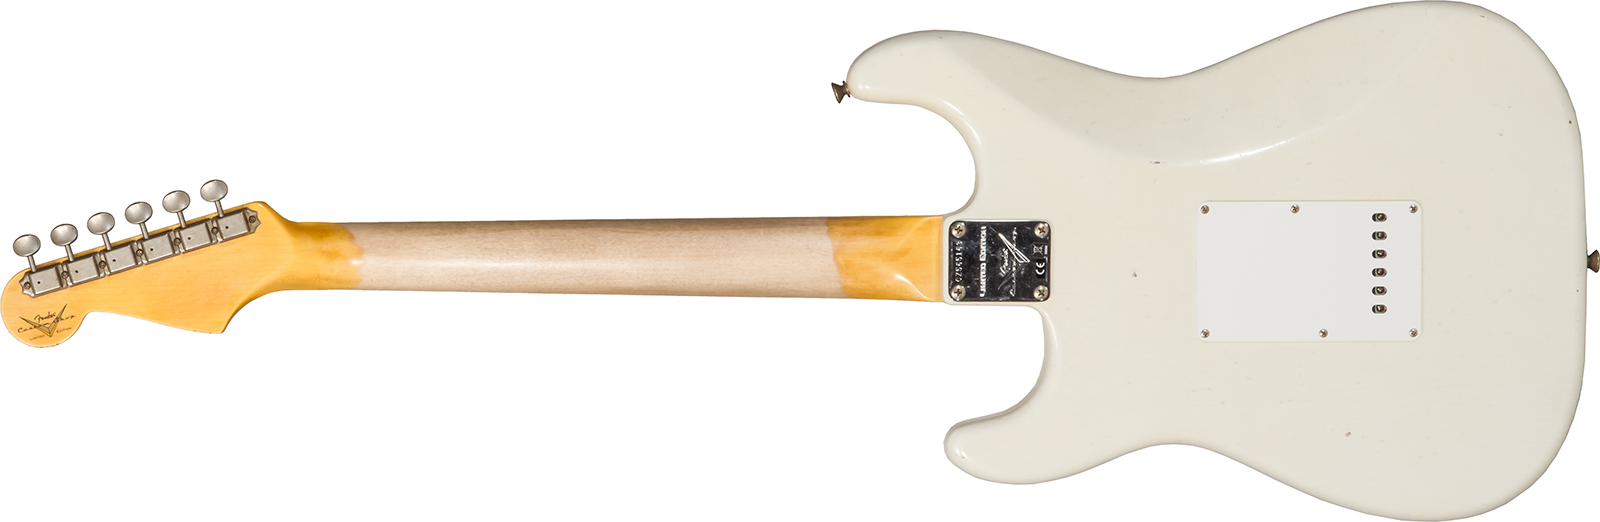 Fender Custom Shop Strat 1962/63 3s Trem Rw #cz565163 - Journeyman Relic Olympic White - E-Gitarre in Str-Form - Variation 1